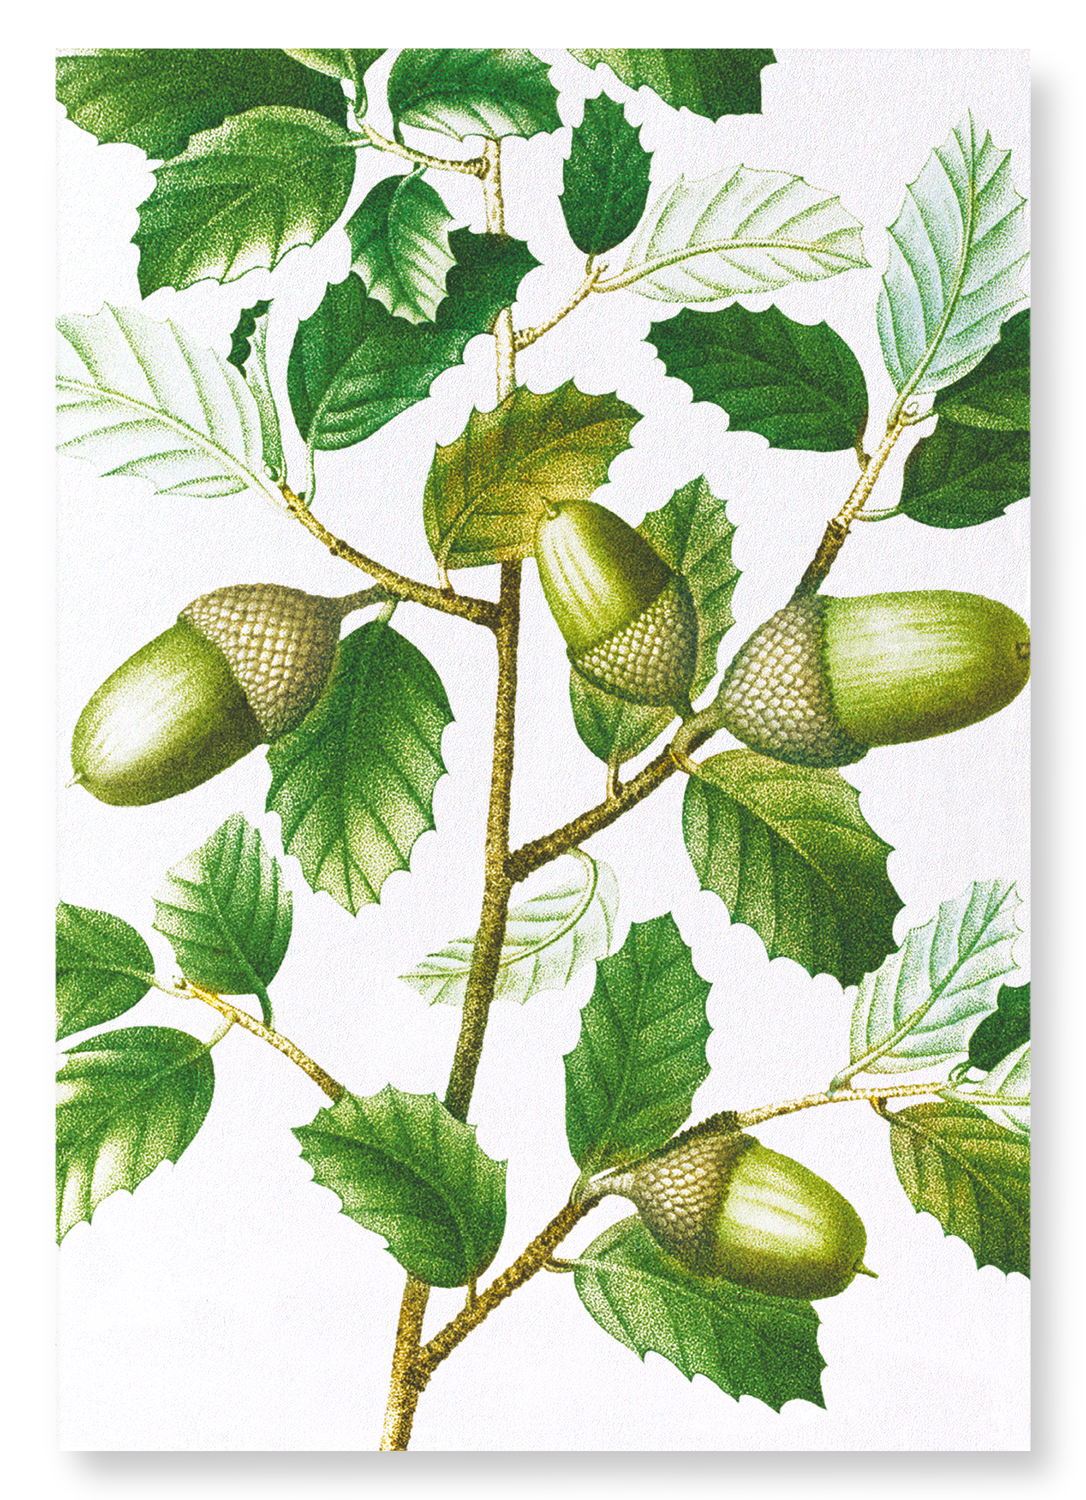 CORK OAK TREE ACORNS: Botanical Art Print